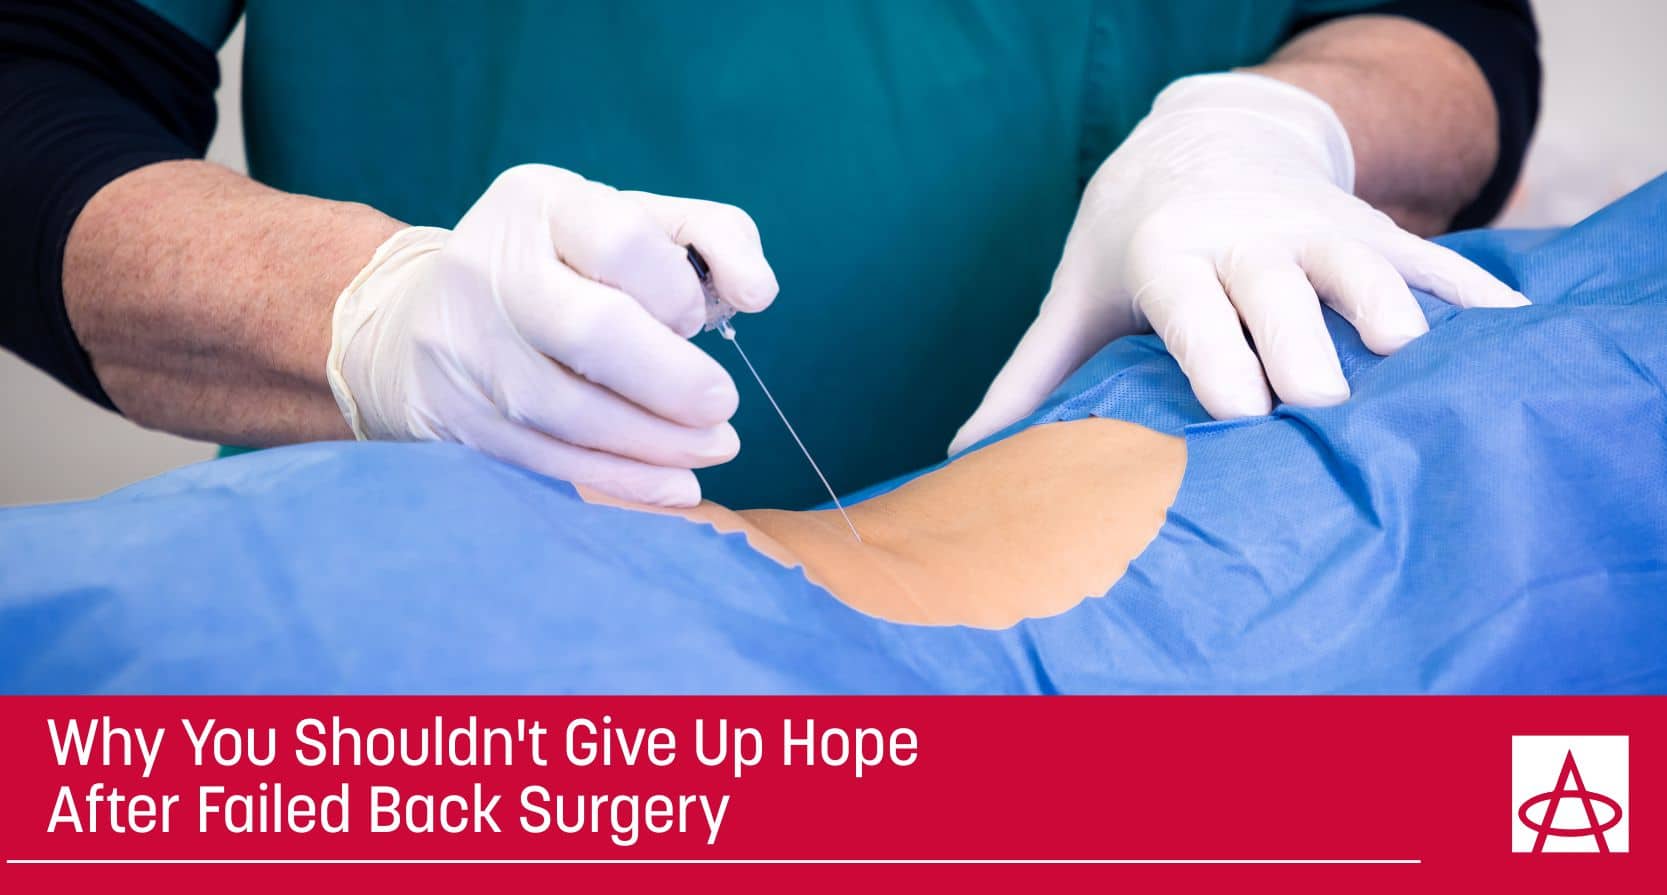 Failed back surgery syndrome